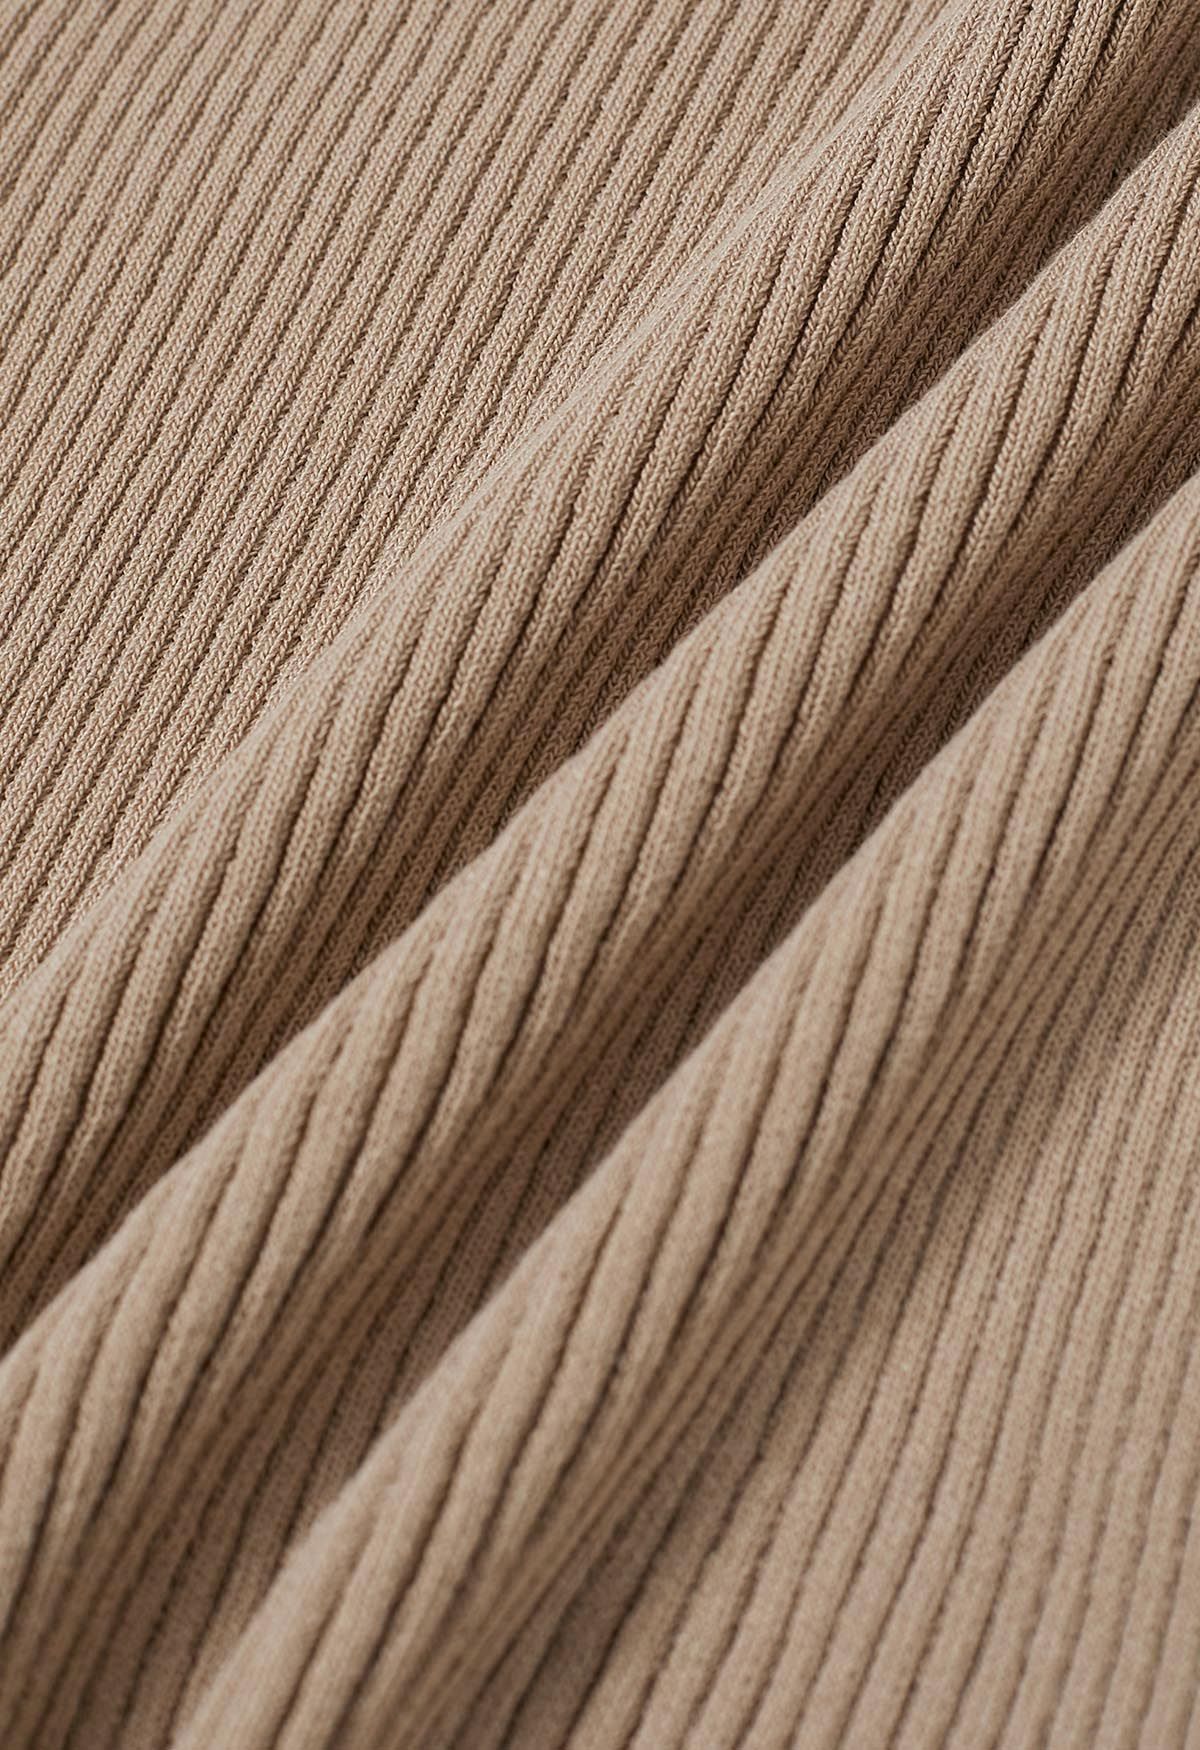 Wooden Bead Decor Halter Knit Top in Tan